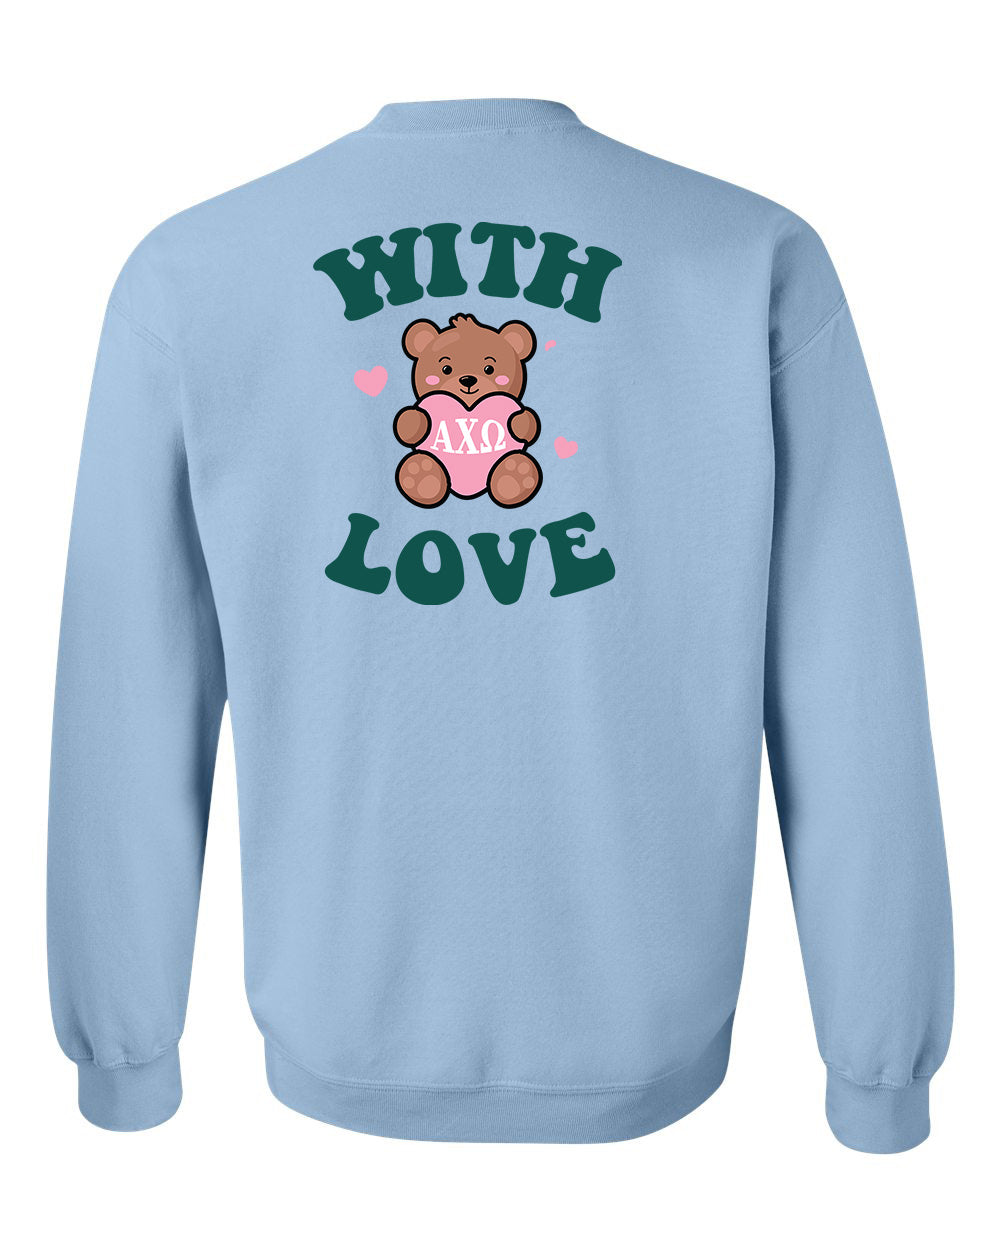 a light blue sweatshirt with a teddy bear on it